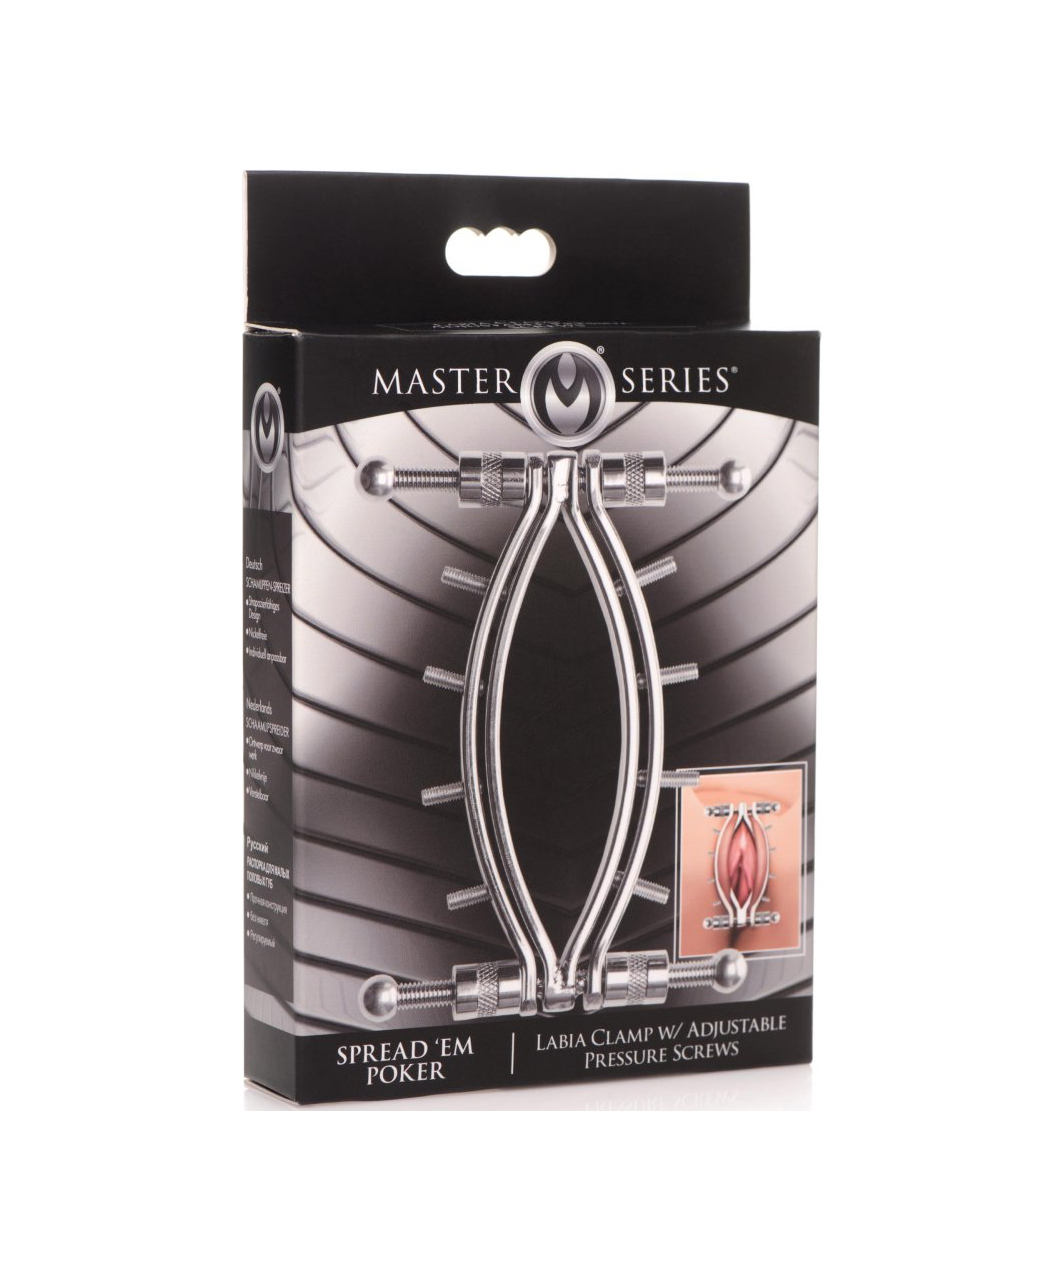 Master Series Spread 'Em Poker adjustable vulva clamp with pressure screws